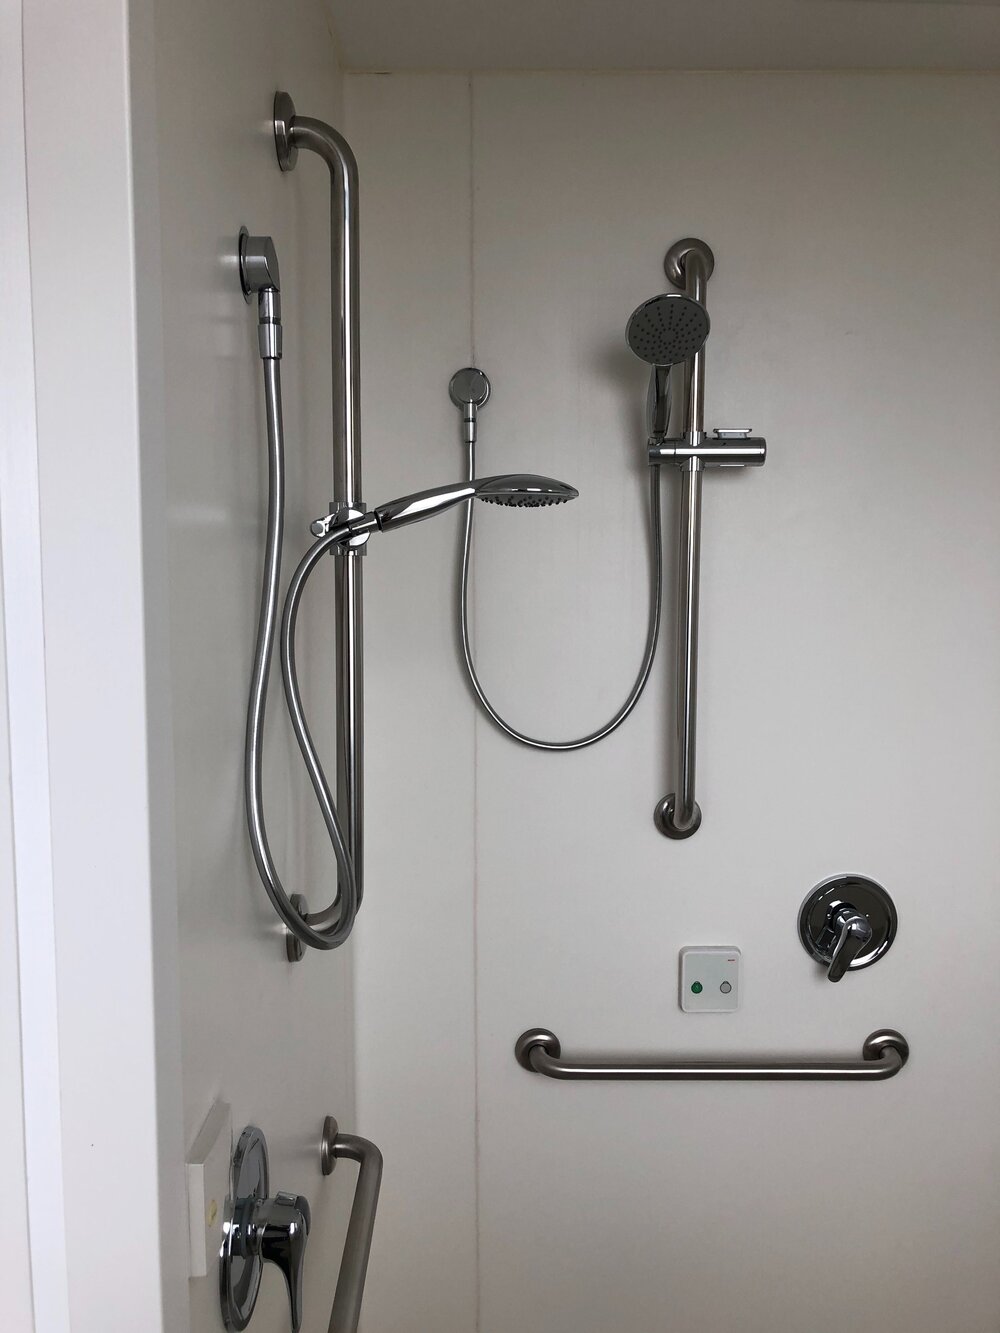 Wollongong Hospital Birth Unit shower heads